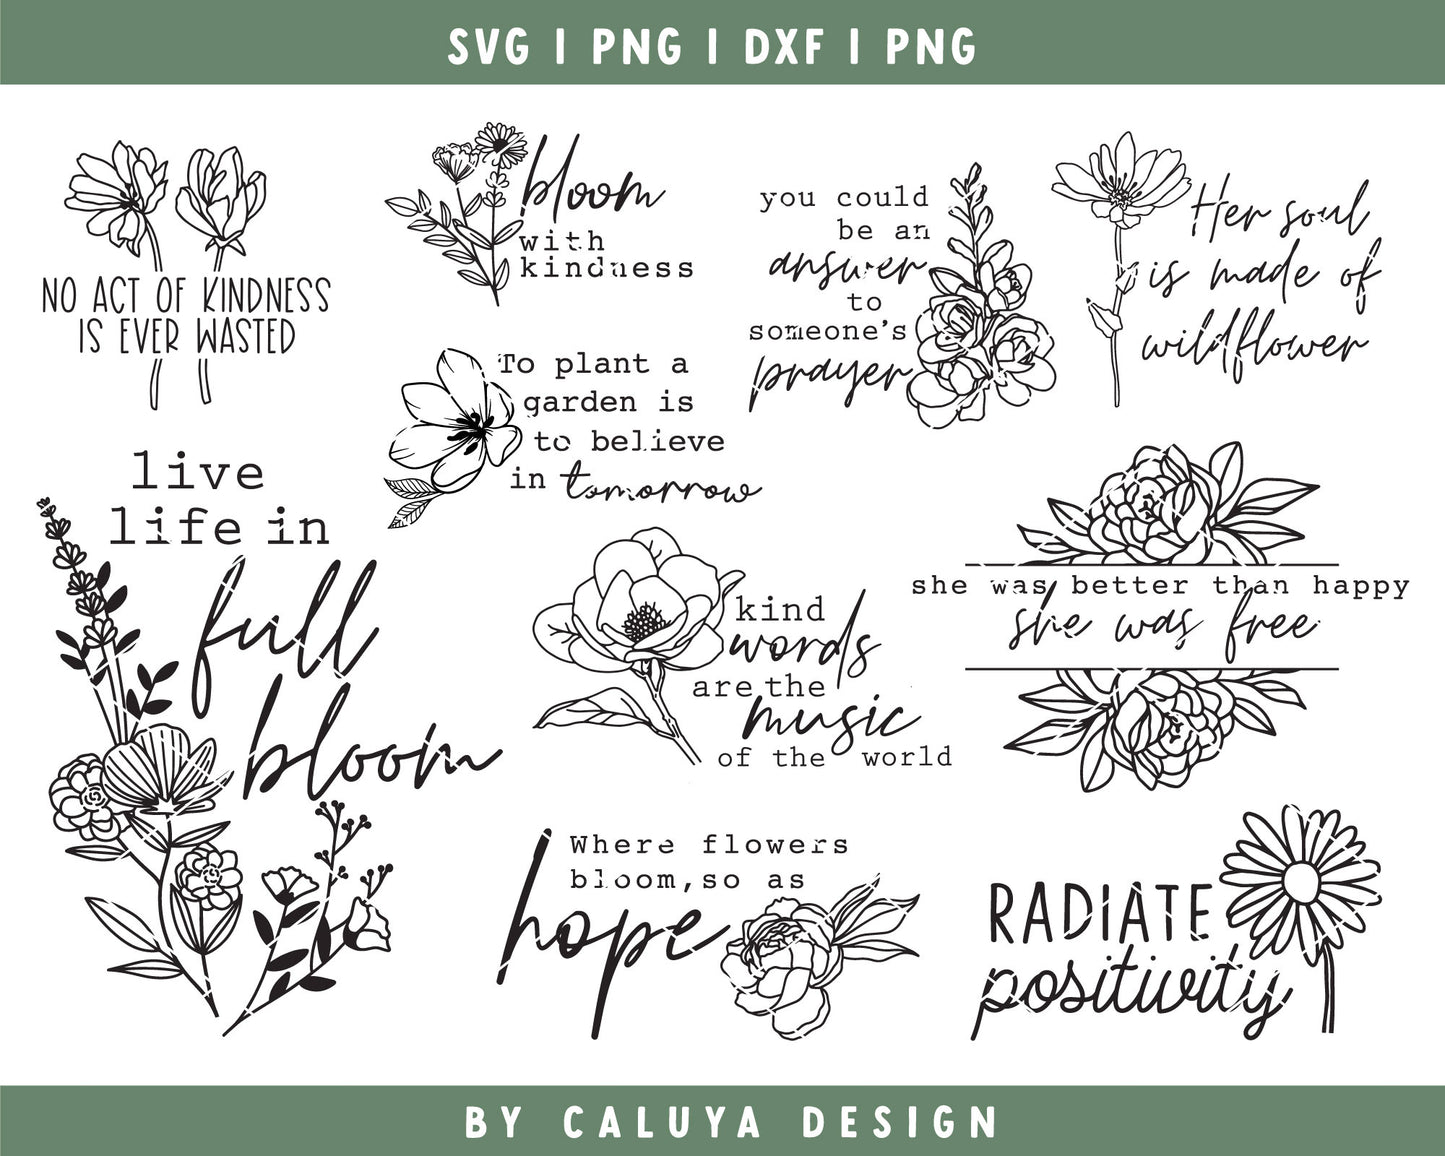 Wildflower Quote SVG Bundle | 20 Pack